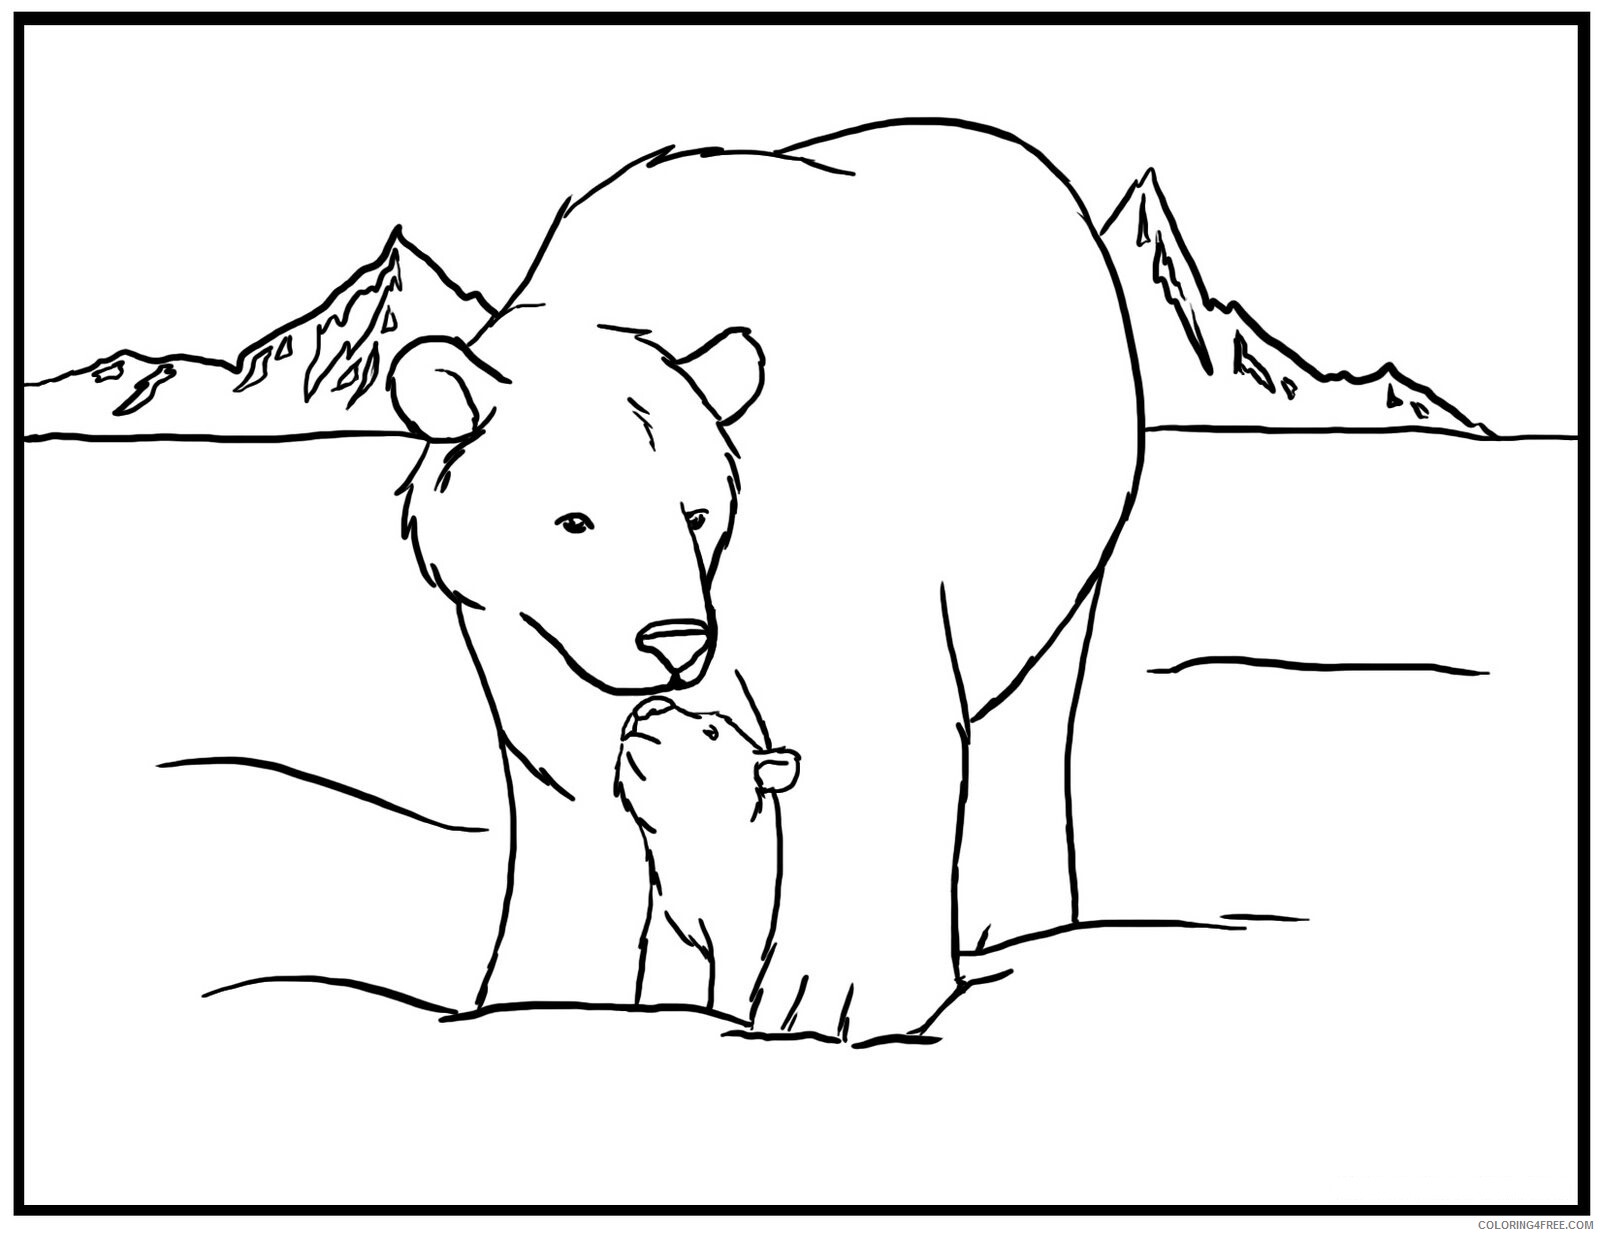 Polar Bear Coloring Pages Animal Printable Sheets Polar Bear Free 2021 3977 Coloring4free